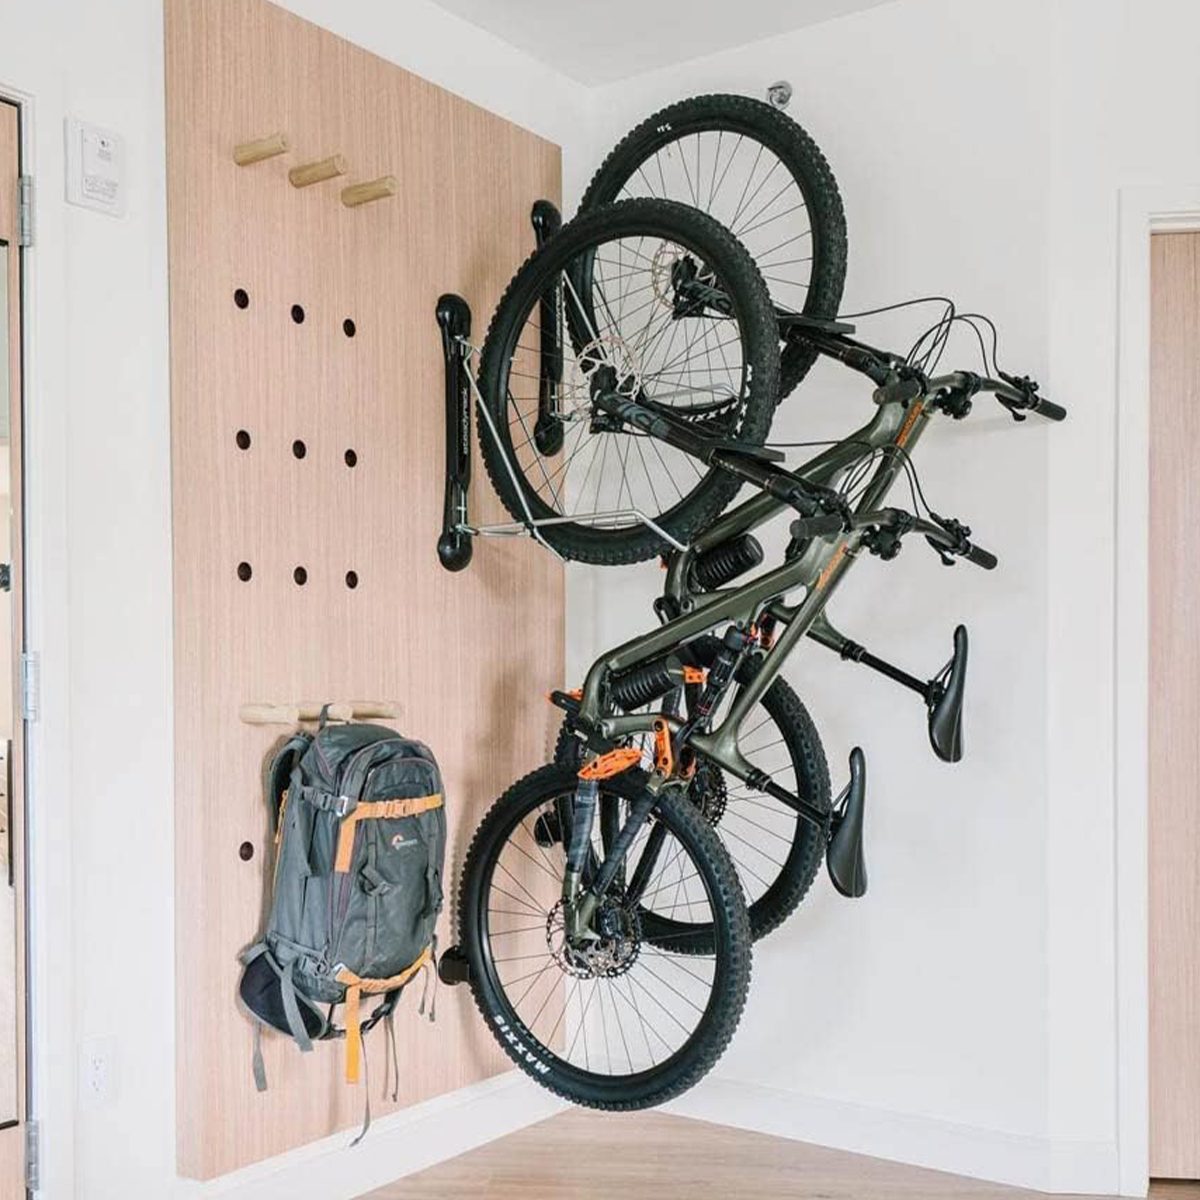 Ultrawall Bike Rack, Garage Bike Rack Wall Mount for 2 Bicycle and